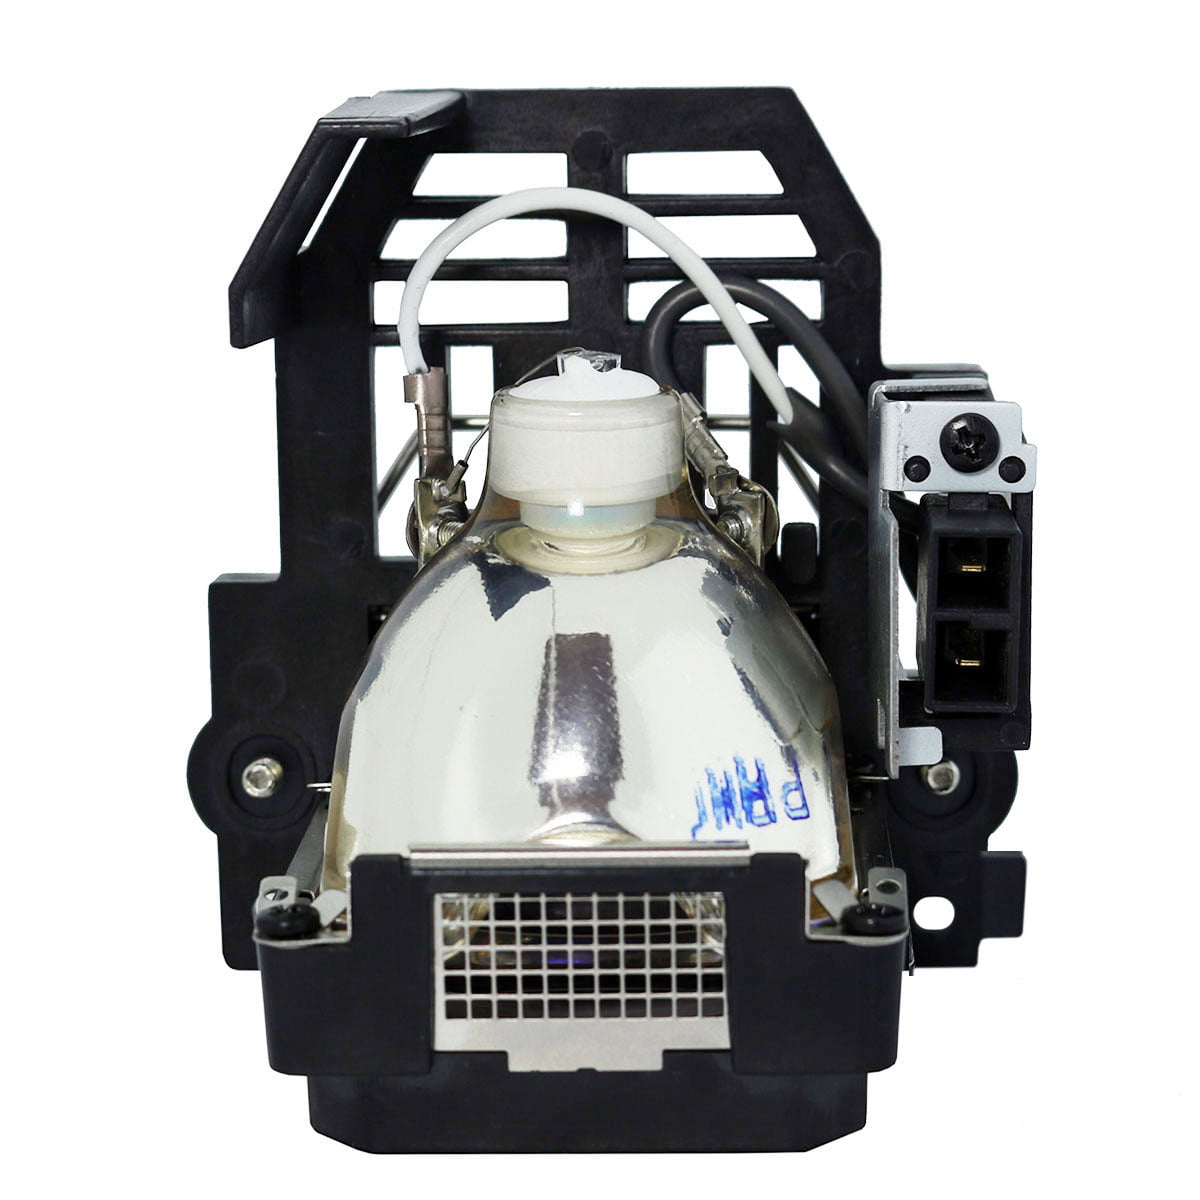 Original Philips Projector Replacement Lamp for JVC PK-L2312U 